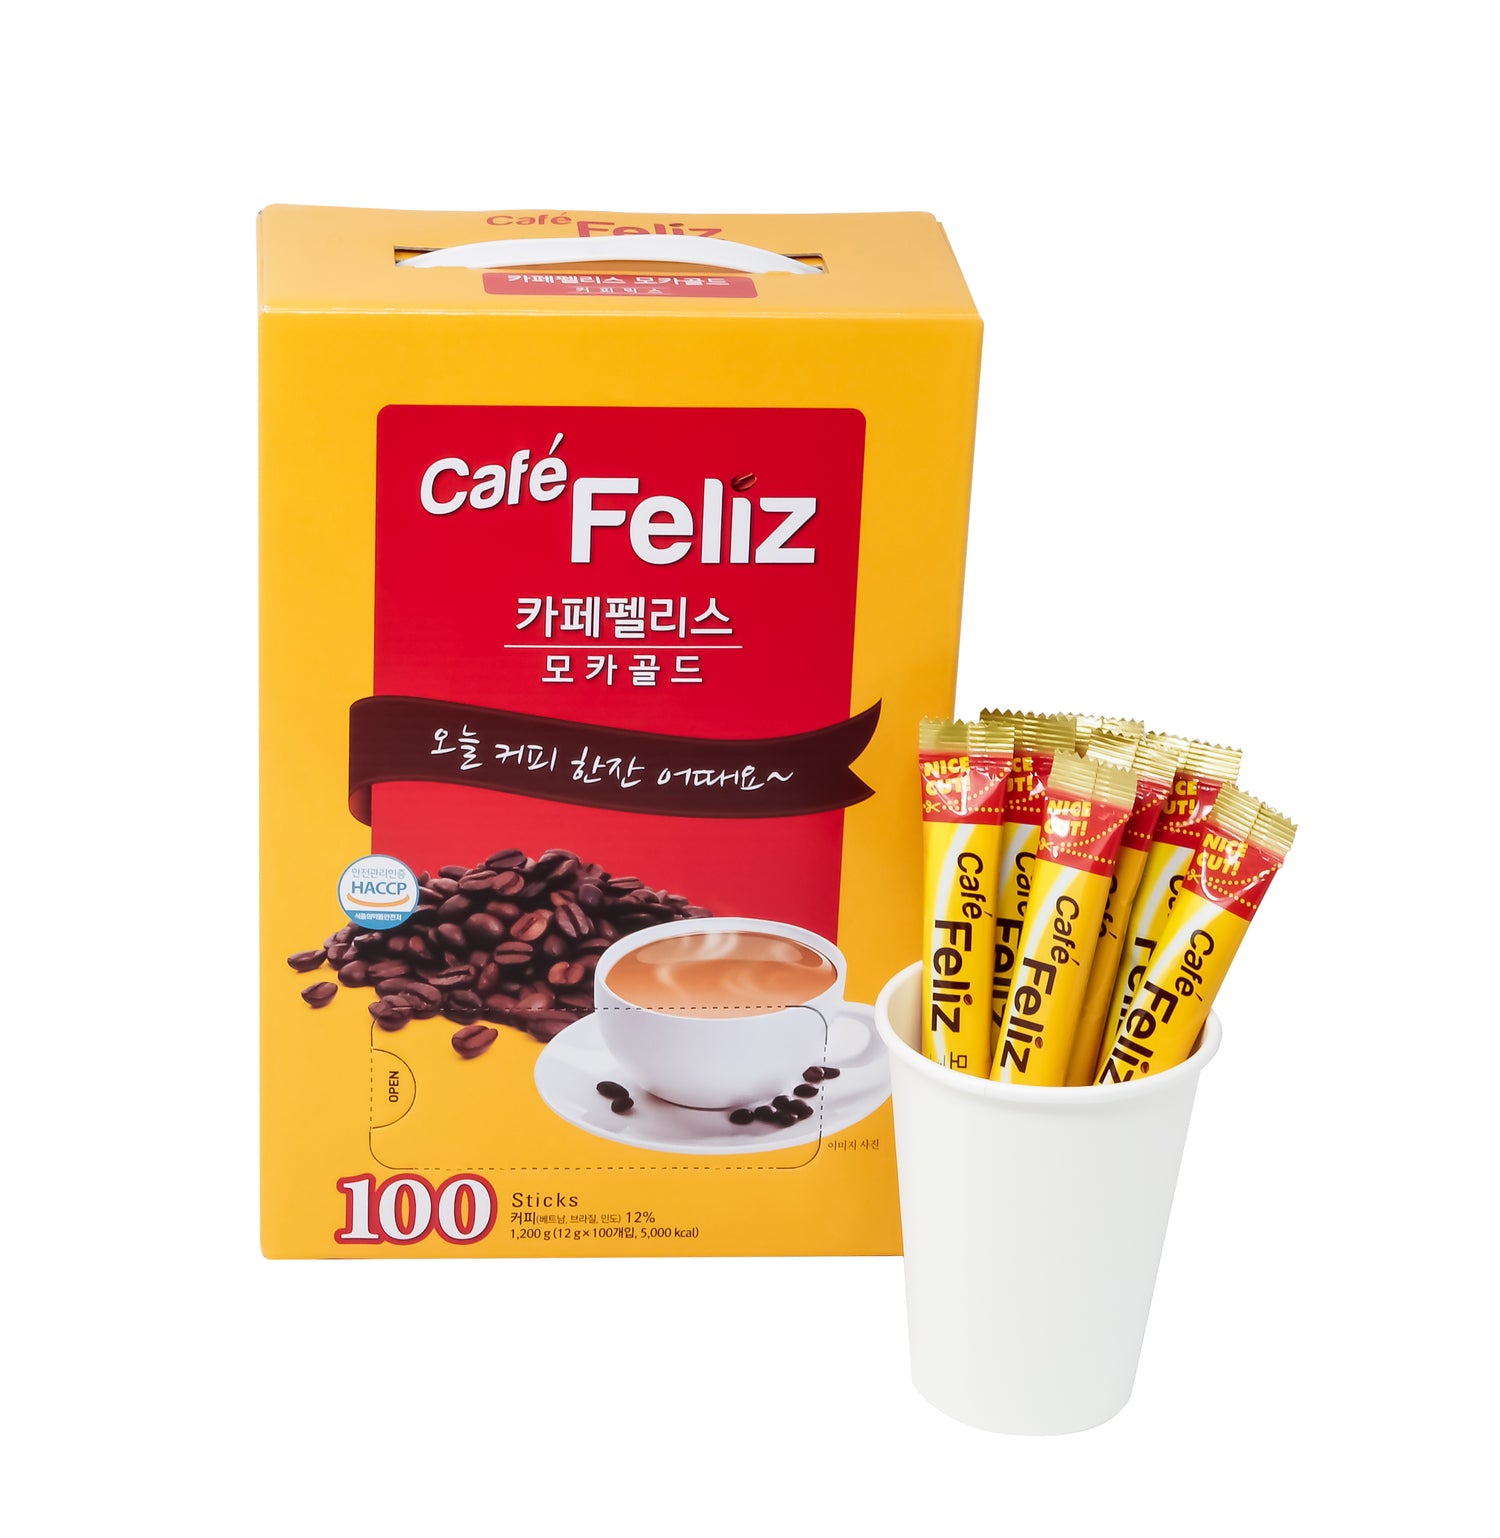 KOREA Cafe Feliz Mocha Gold Instant Coffee Mix, 0.42oz(12g) per Stick